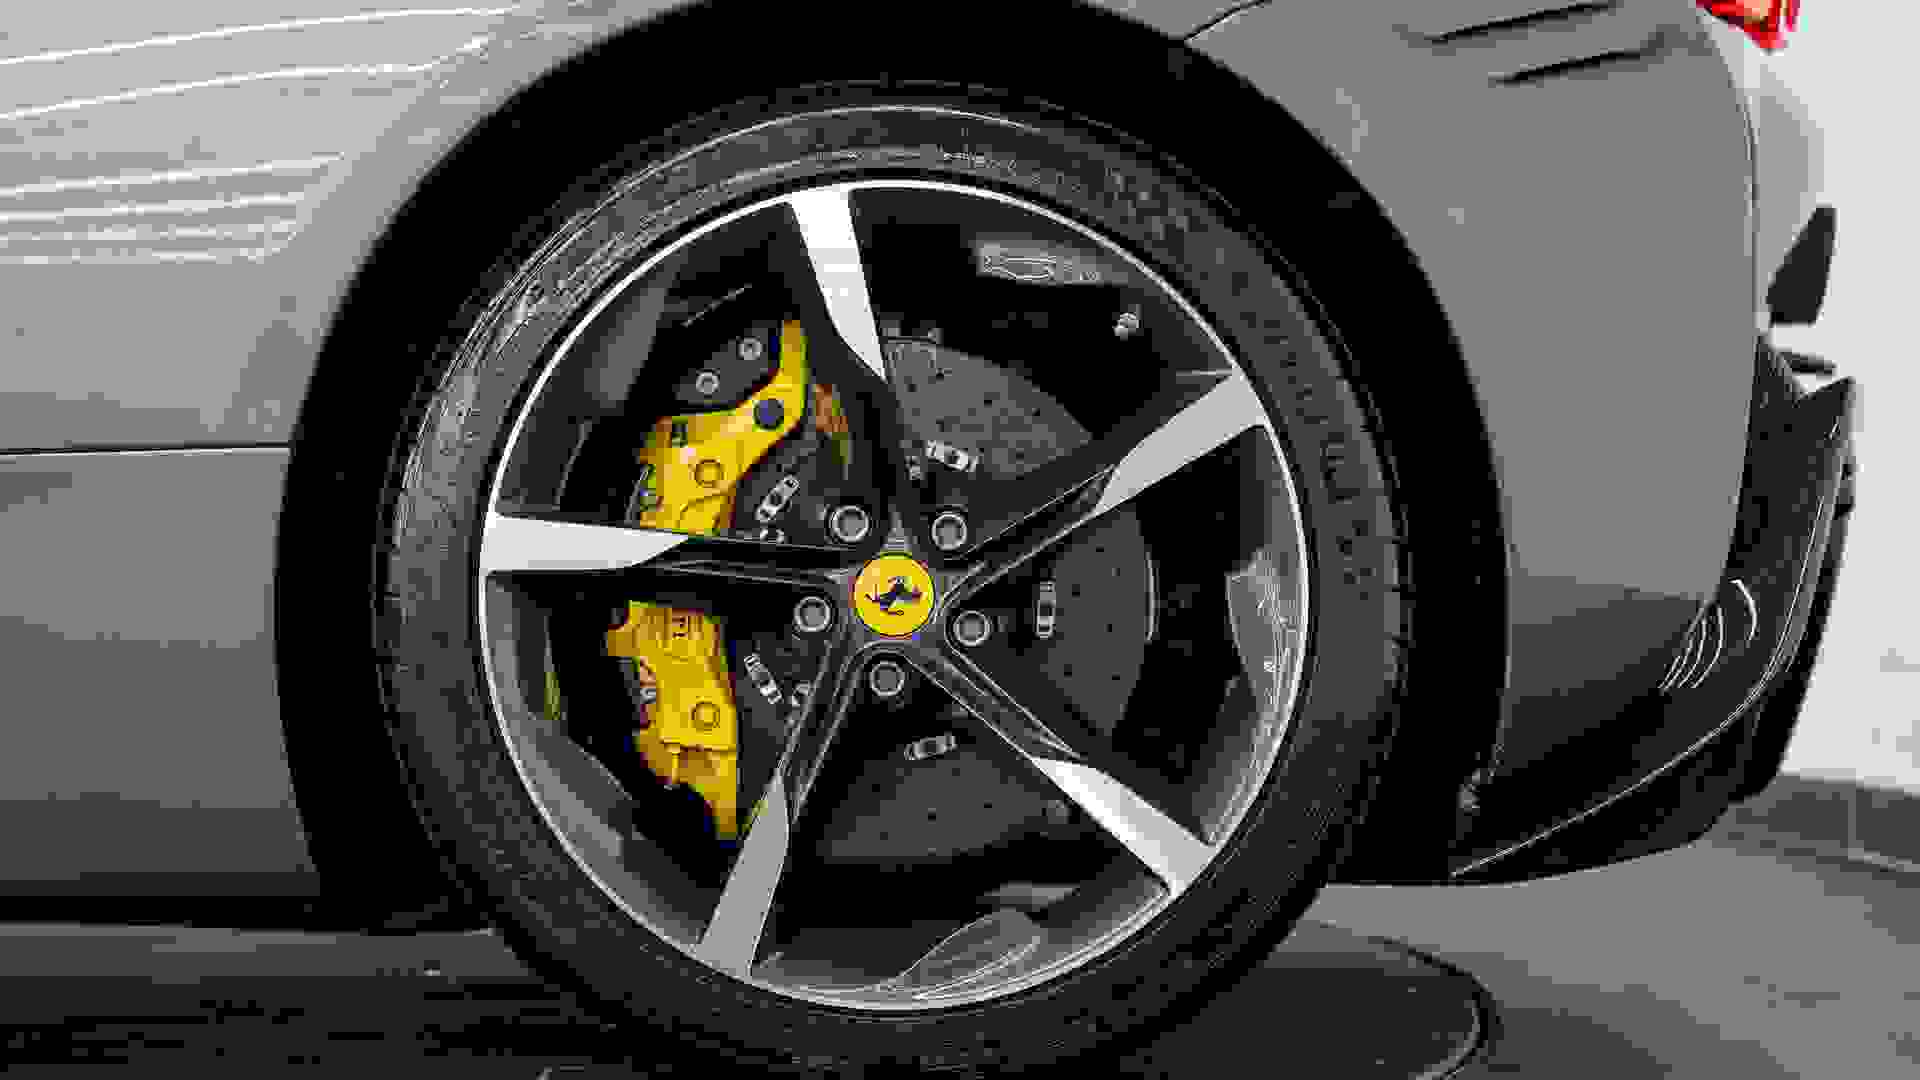 Ferrari SF90 Stradale Photo 33dc8e60-2fa9-460b-9b79-99b597f4589a.jpg